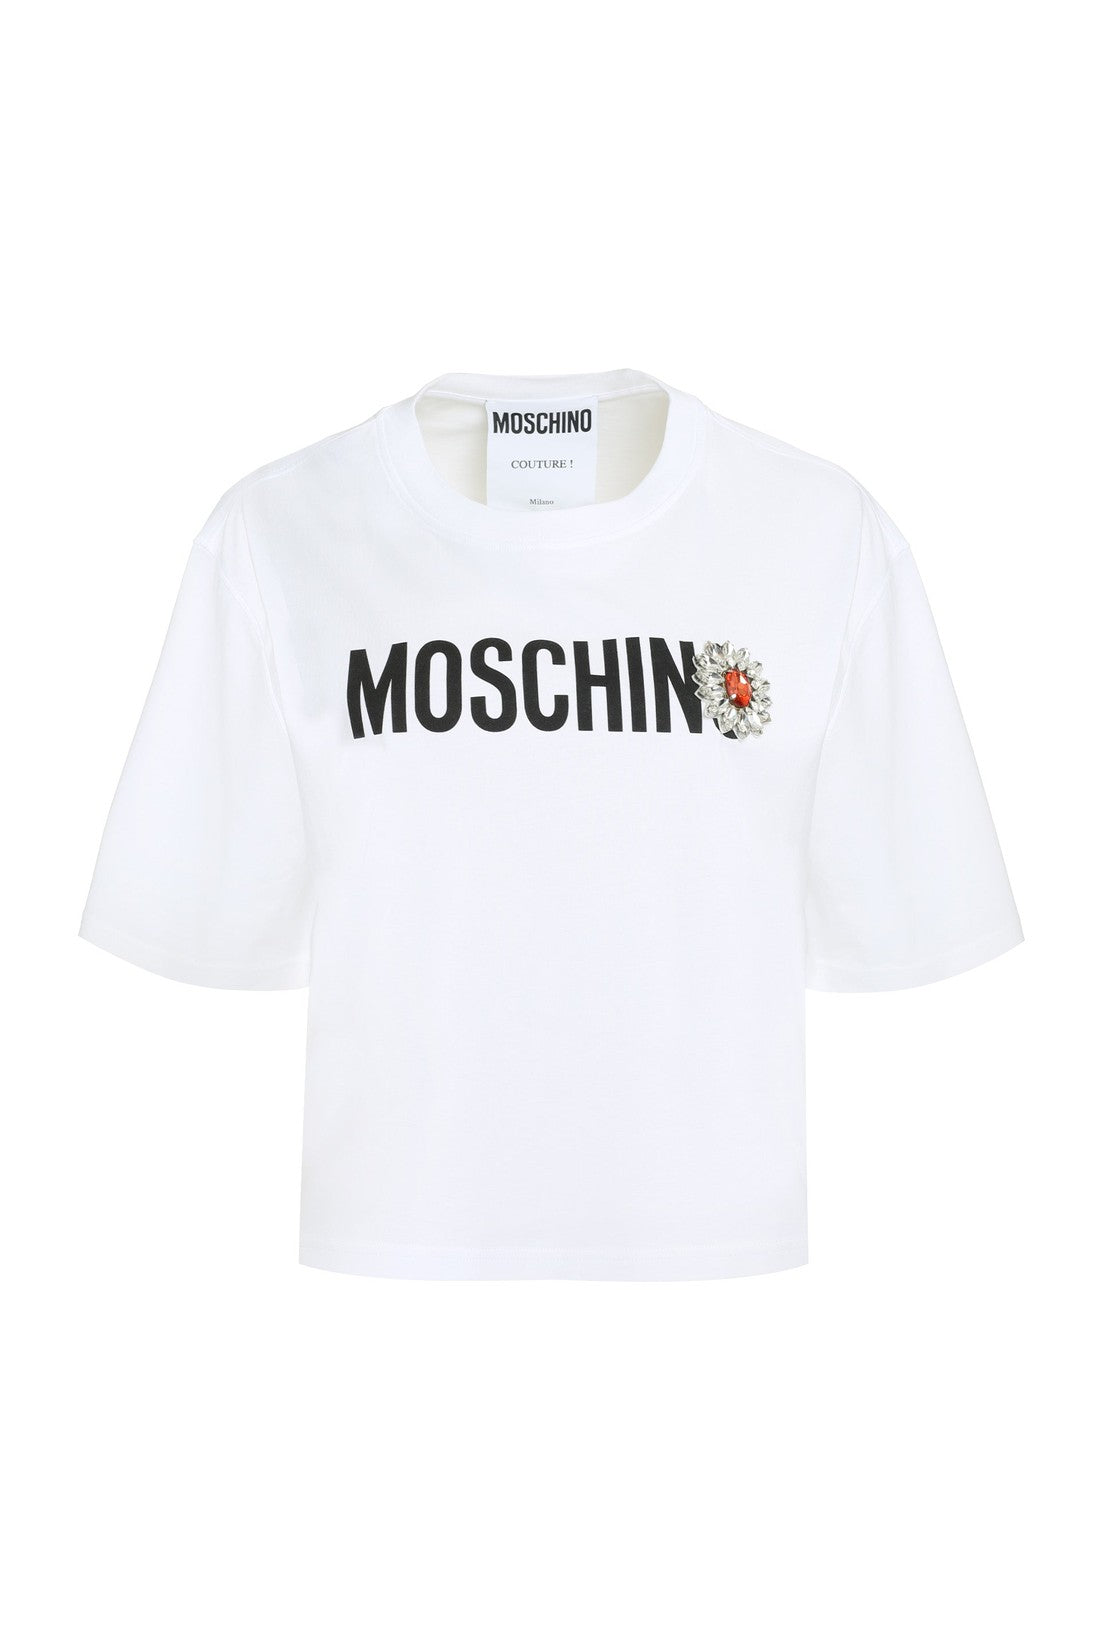 Moschino-OUTLET-SALE-Logo cotton t-shirt-ARCHIVIST